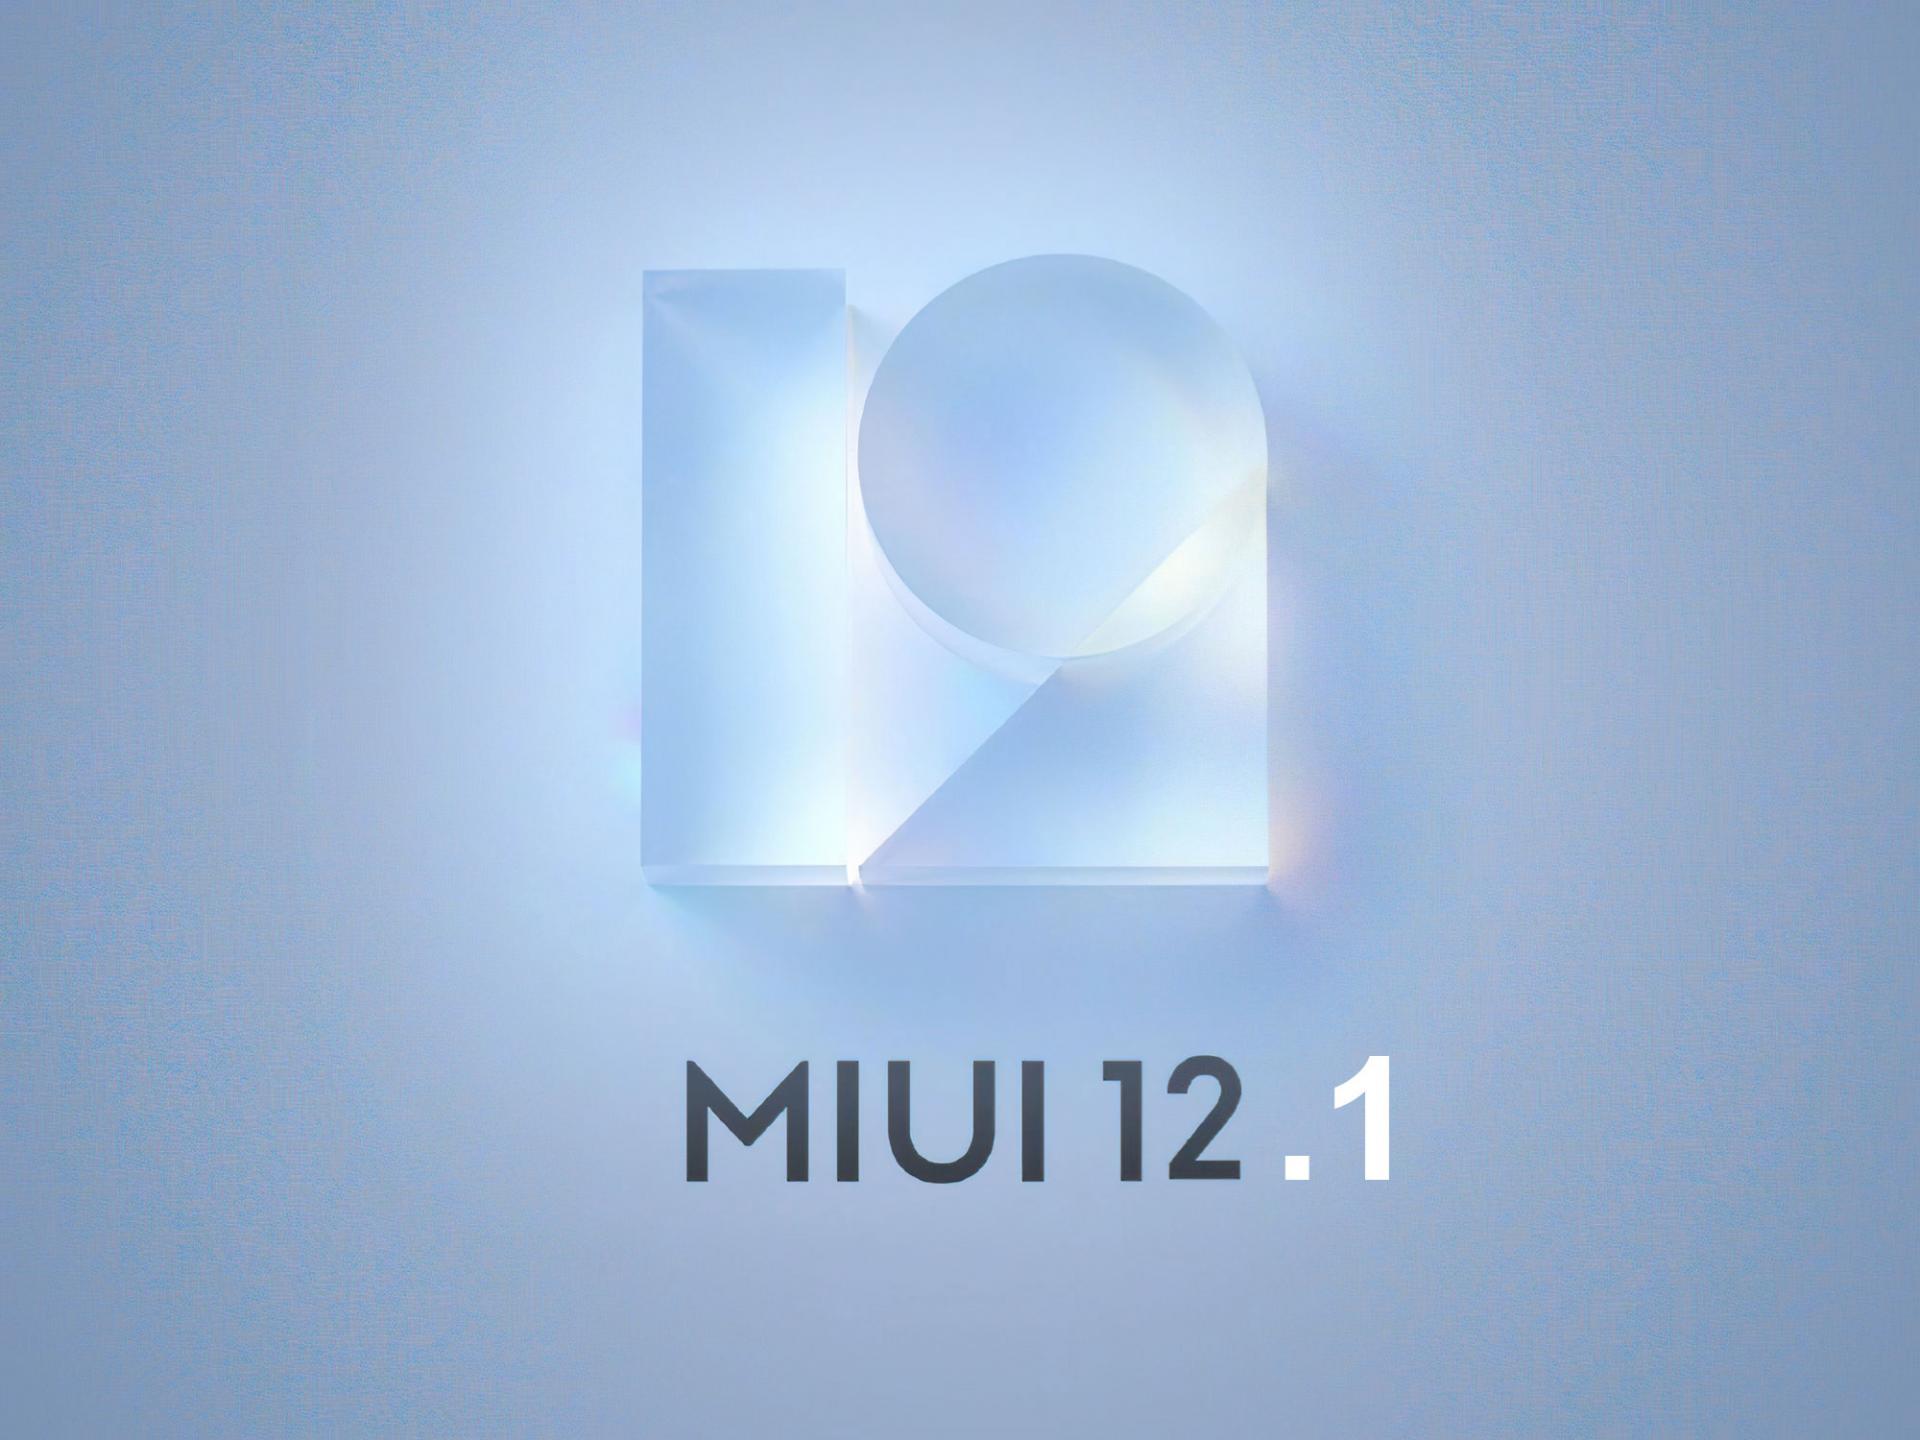 Miui v 12.5. MIUI 12 логотип. Xiaomi MIUI 12. MIUI 12.5. Логотипы Xiaomi MIUI.